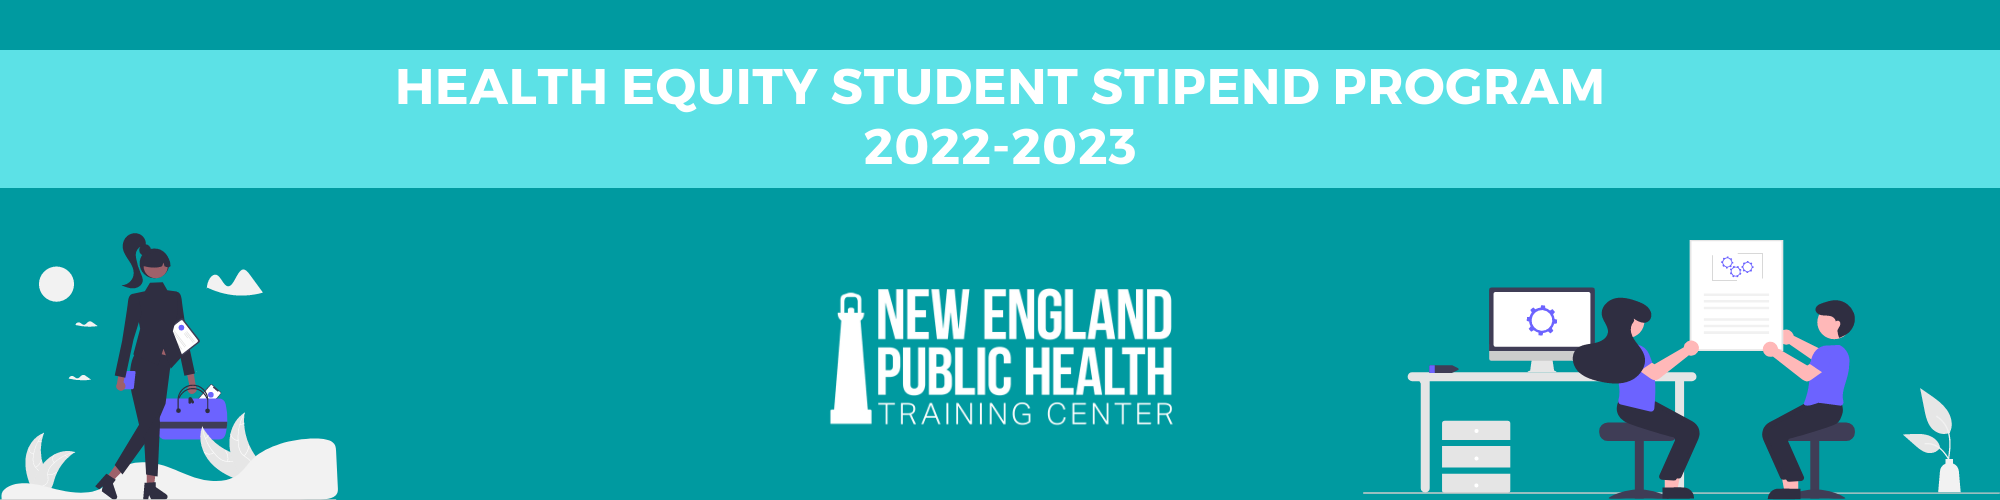 Health Equity Student Stipend Program 2022-2023